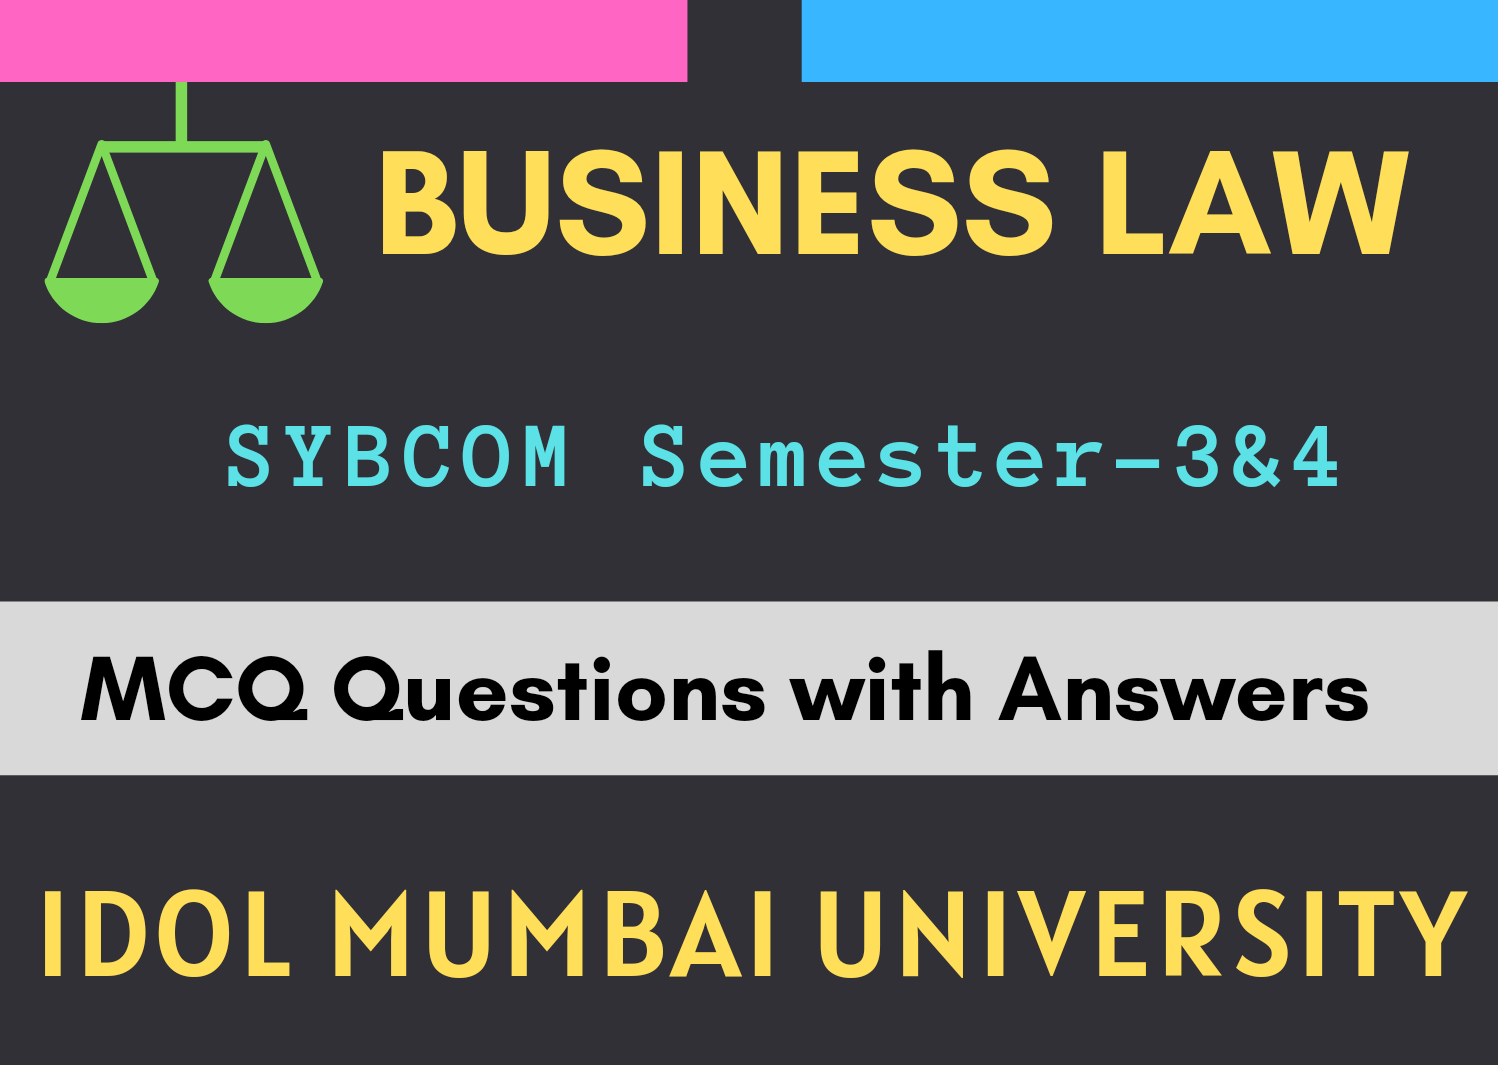 SYBCOM Business Law MCQ with Answers: Mumbai University 2021